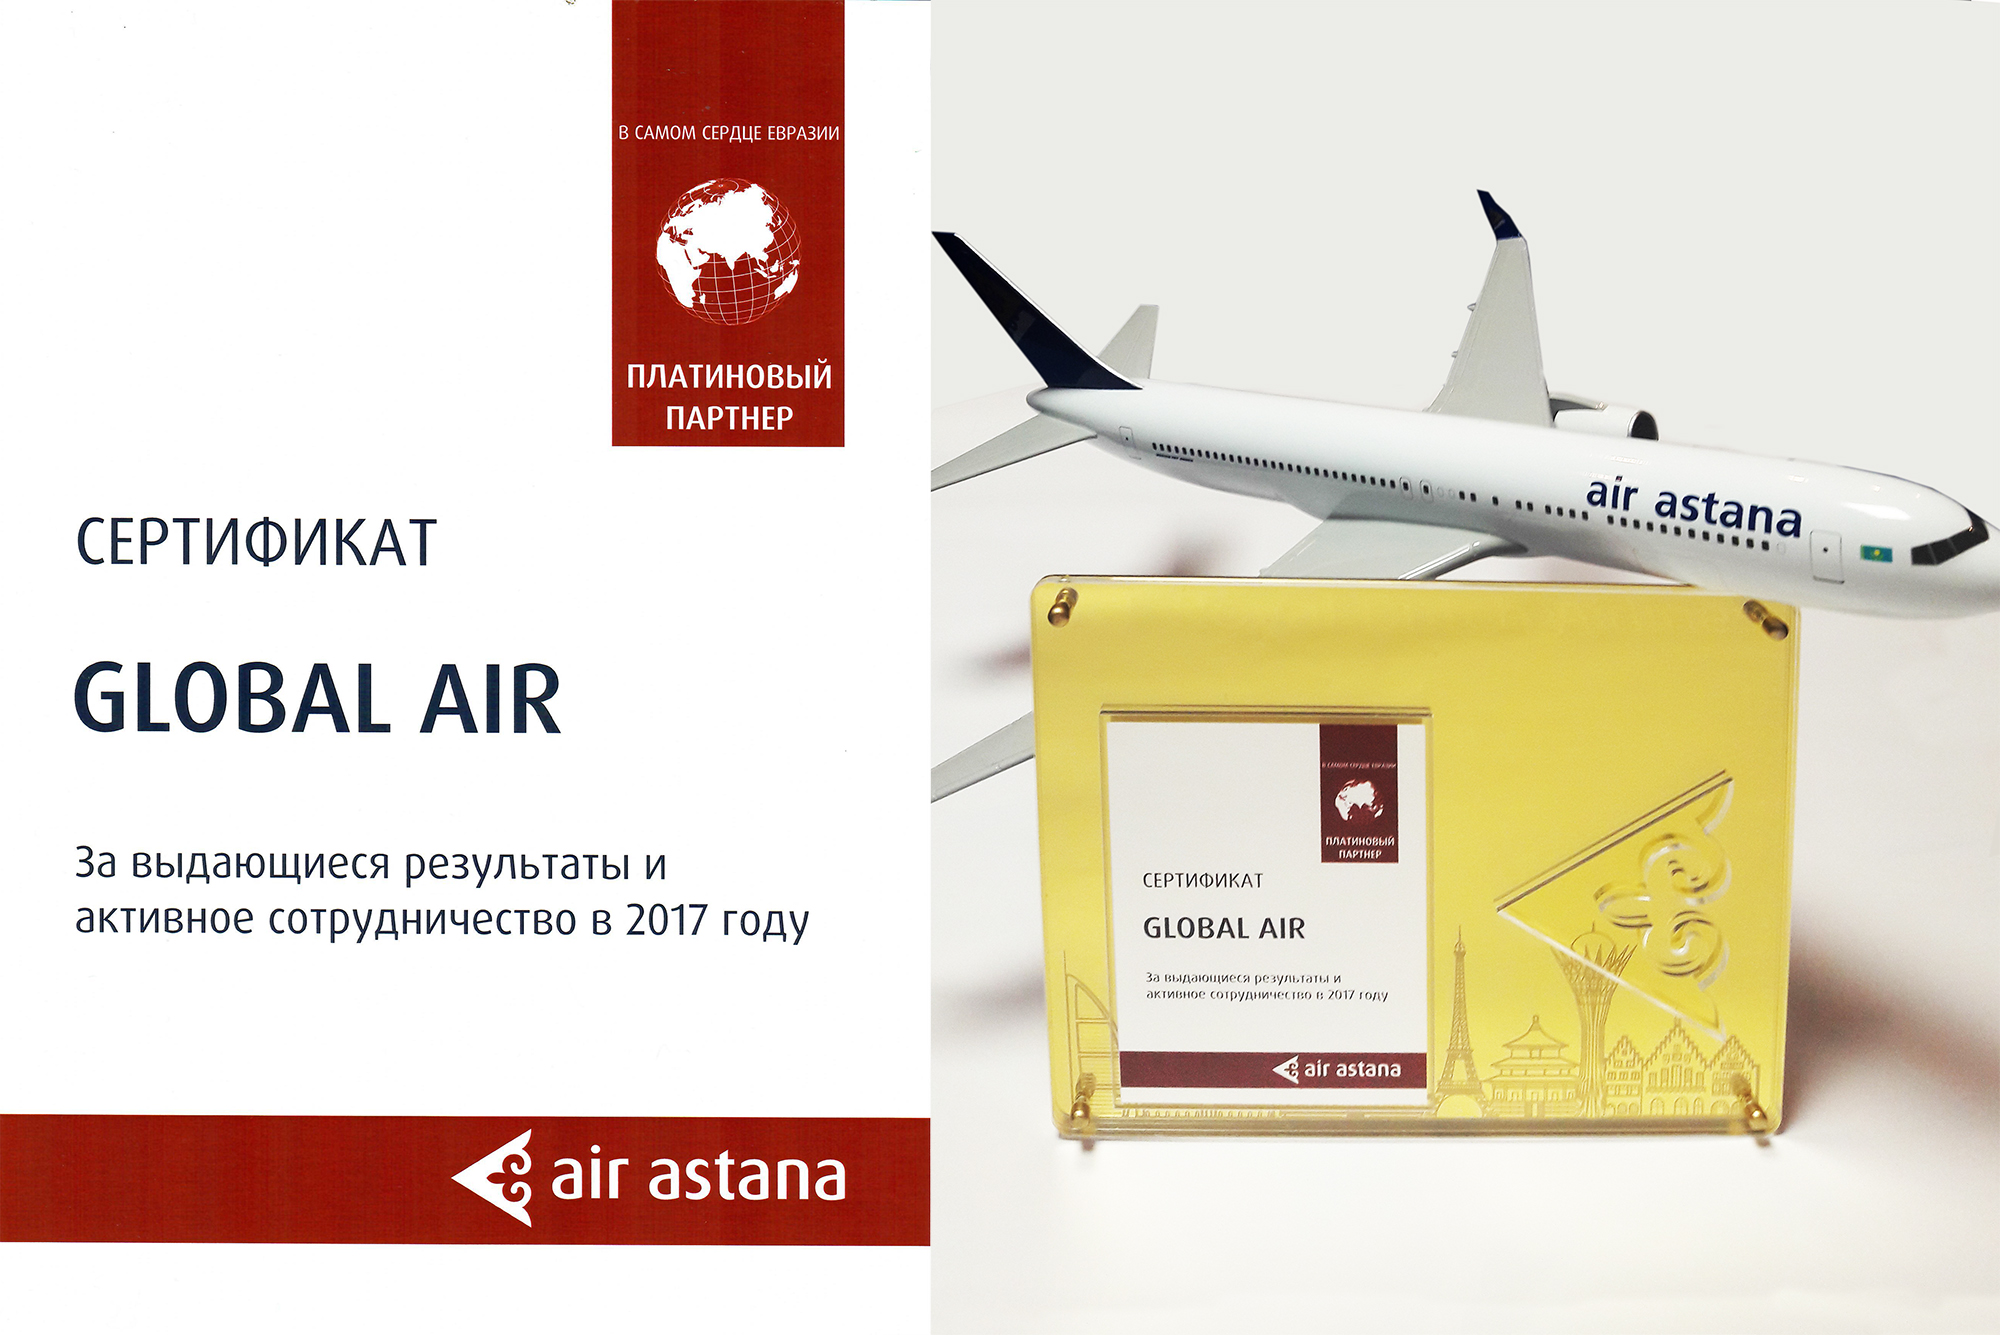 Global Air - платиновый партнер Air Astana